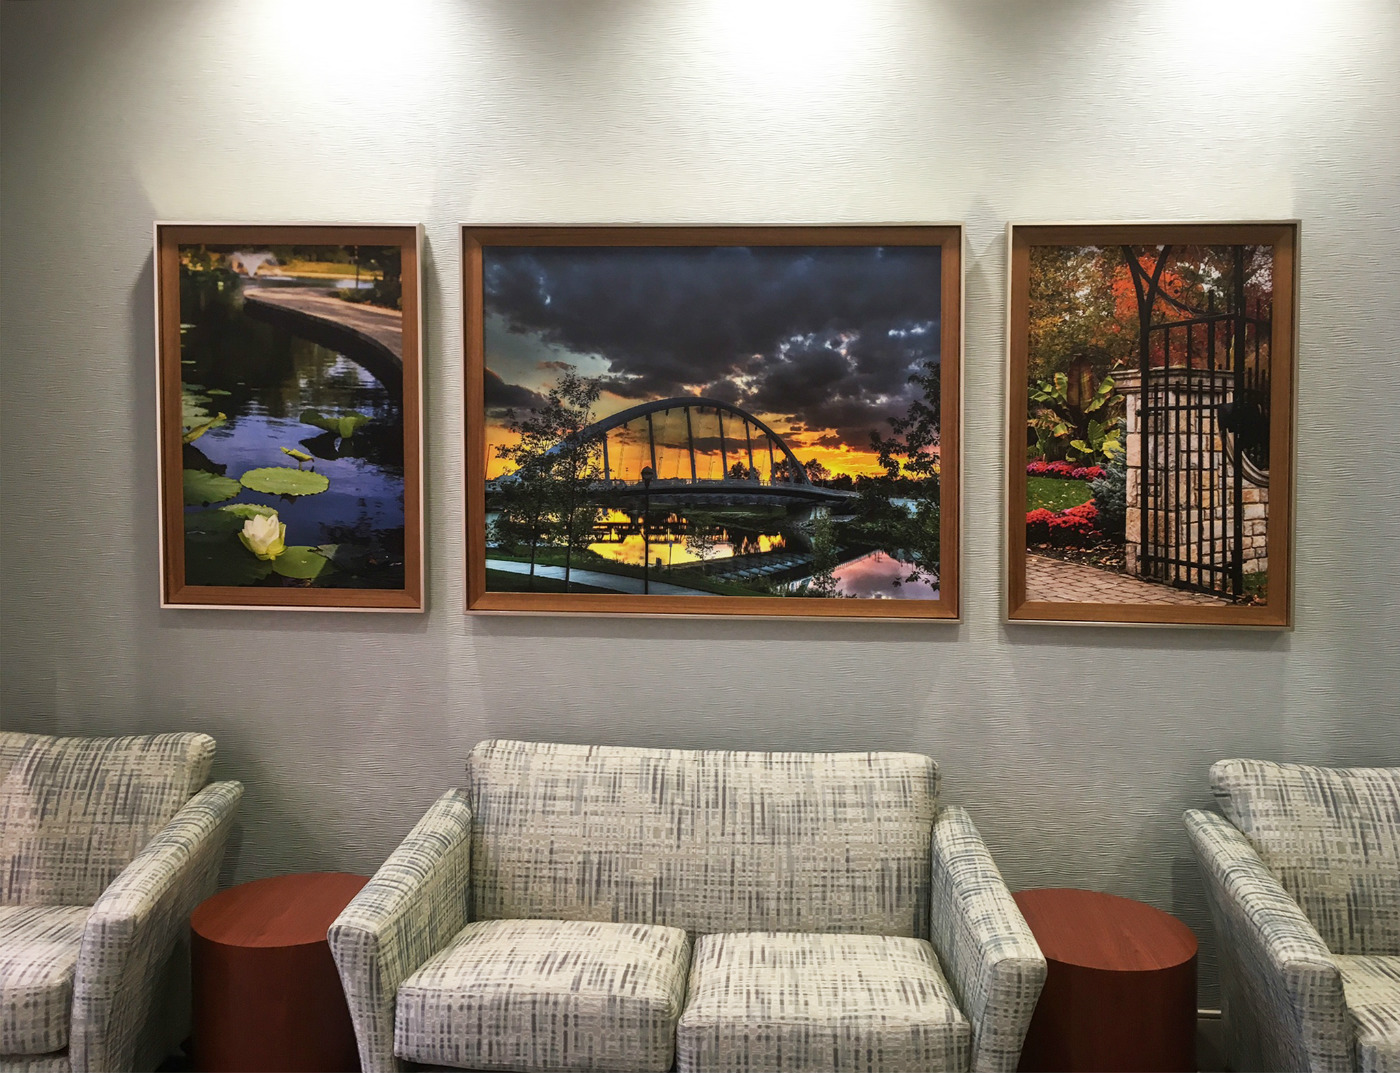 Artwork hanging in the lobby of Mount Carmel Rehabilitation Hospital